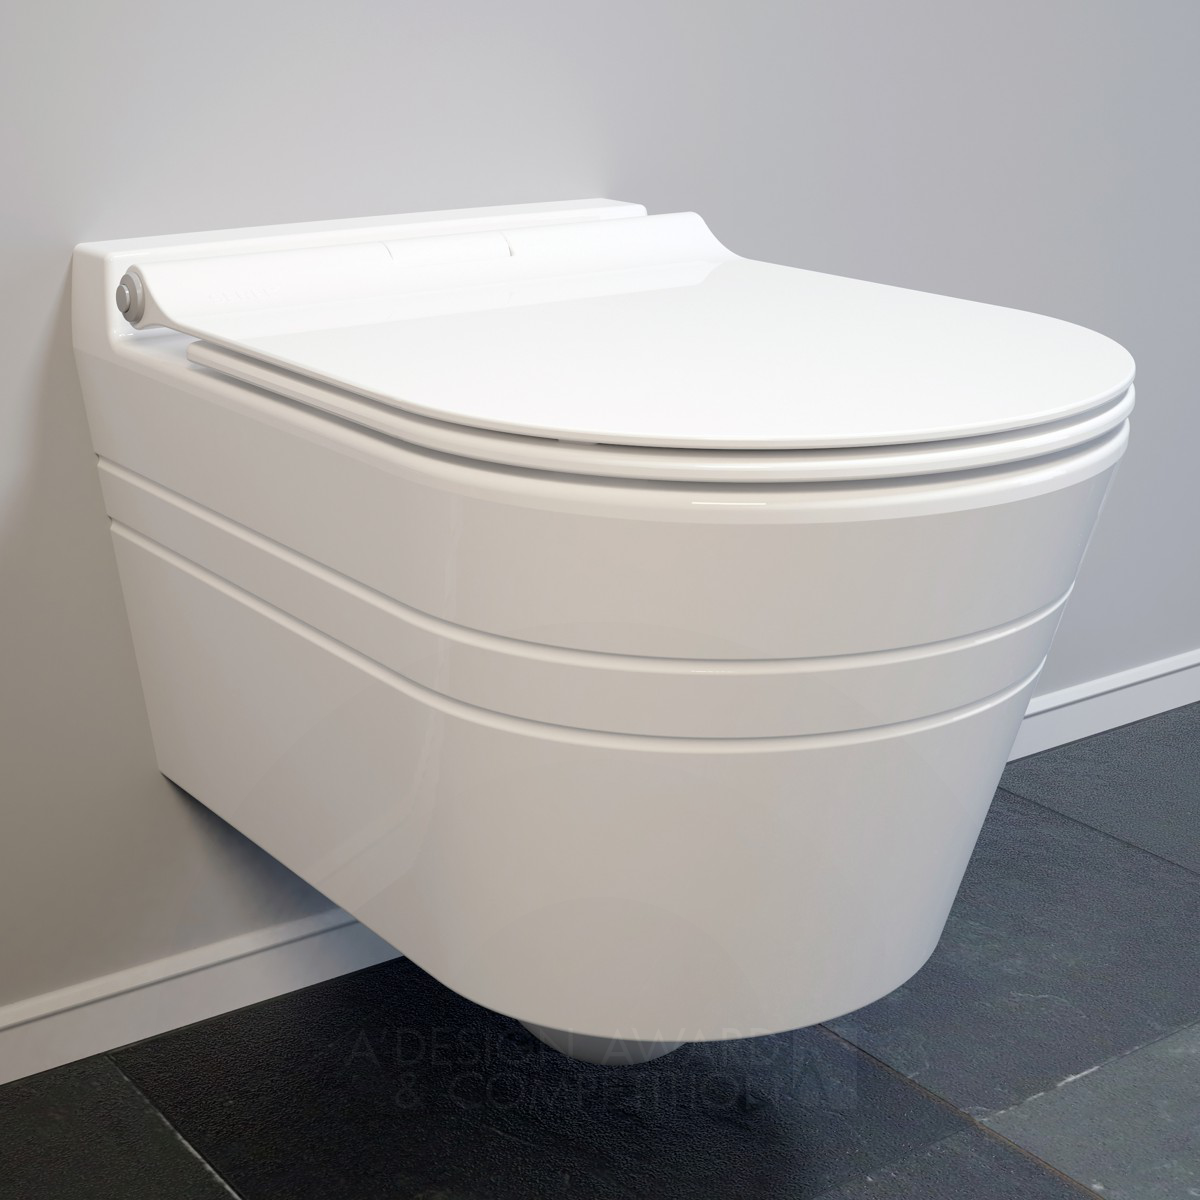 Serel Poseidon EasyWash Toilet Bowl by Serel Design Team Bronze Bathroom Furniture and Sanitary Ware Design Award Winner 2018 